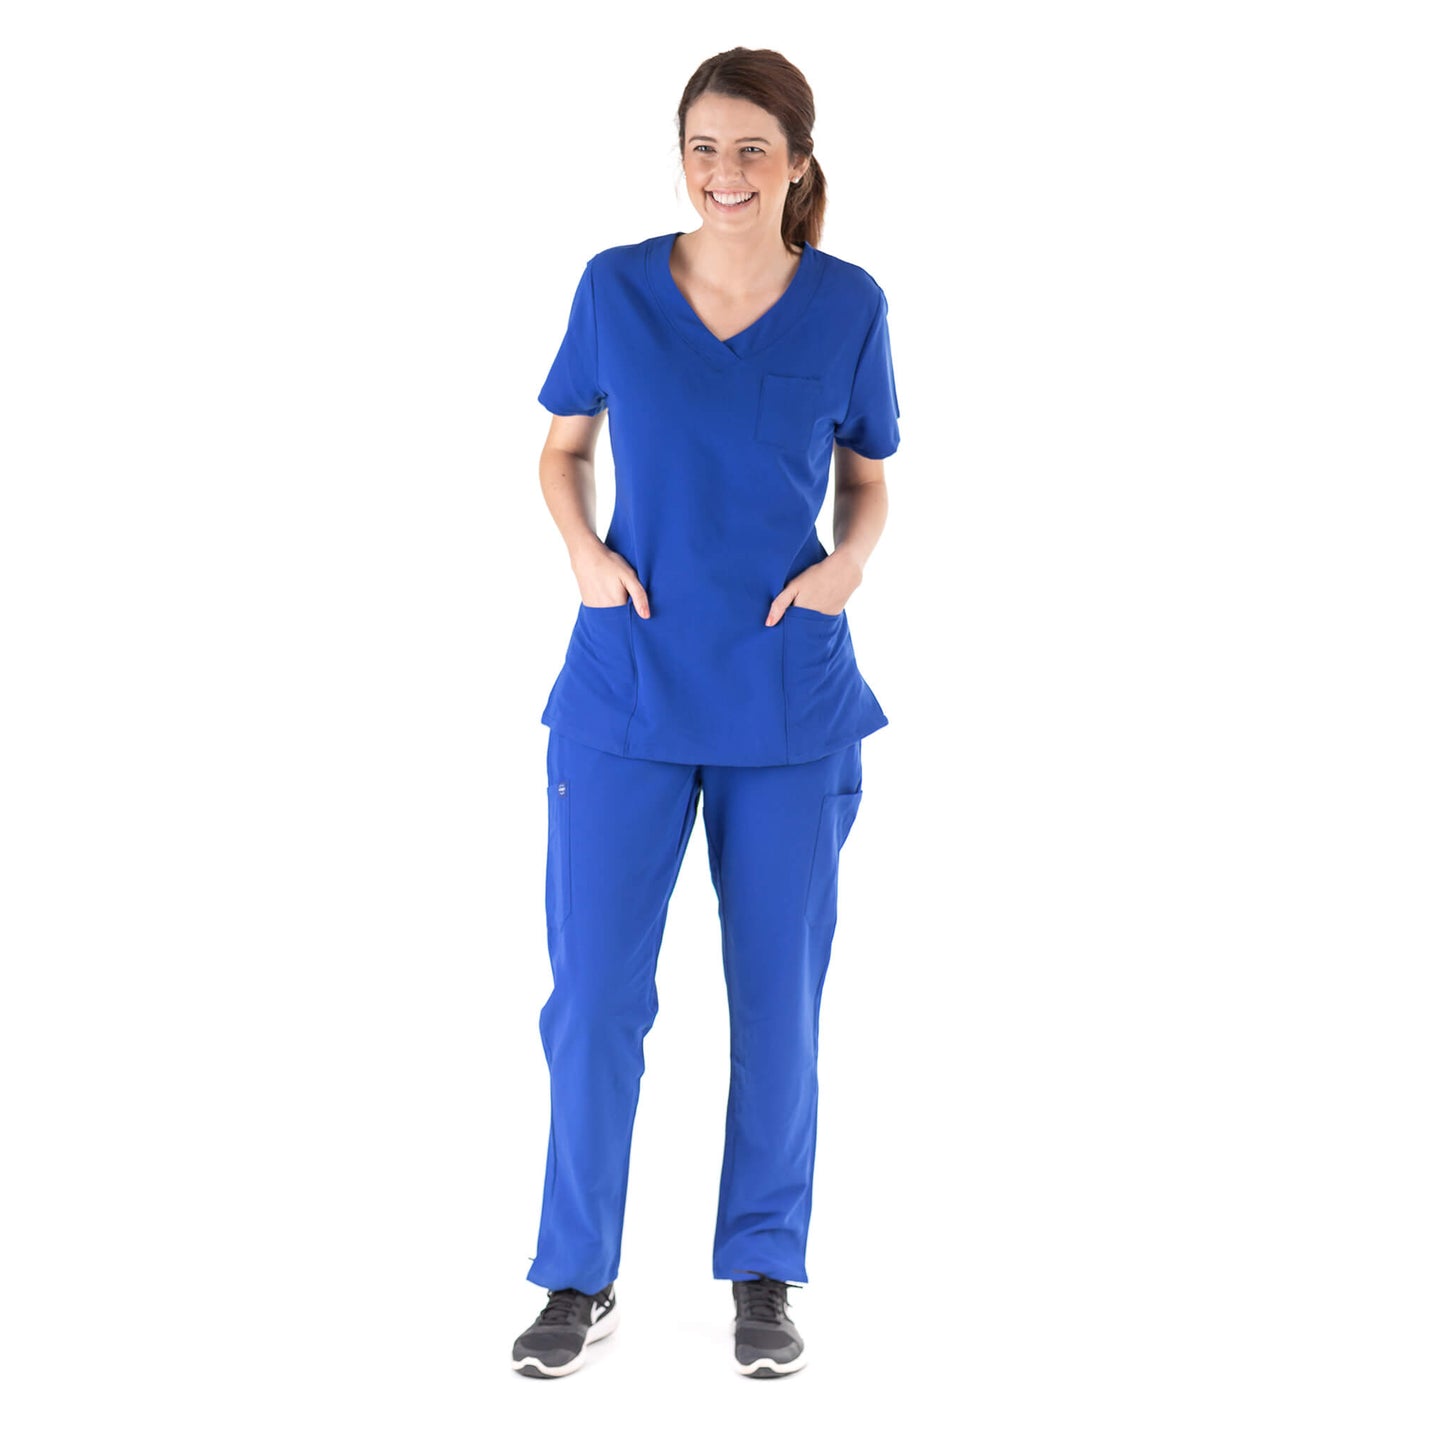 Nurse wearing Royal Blue Medical Scrub Set from Fit Right Medical Scrubs